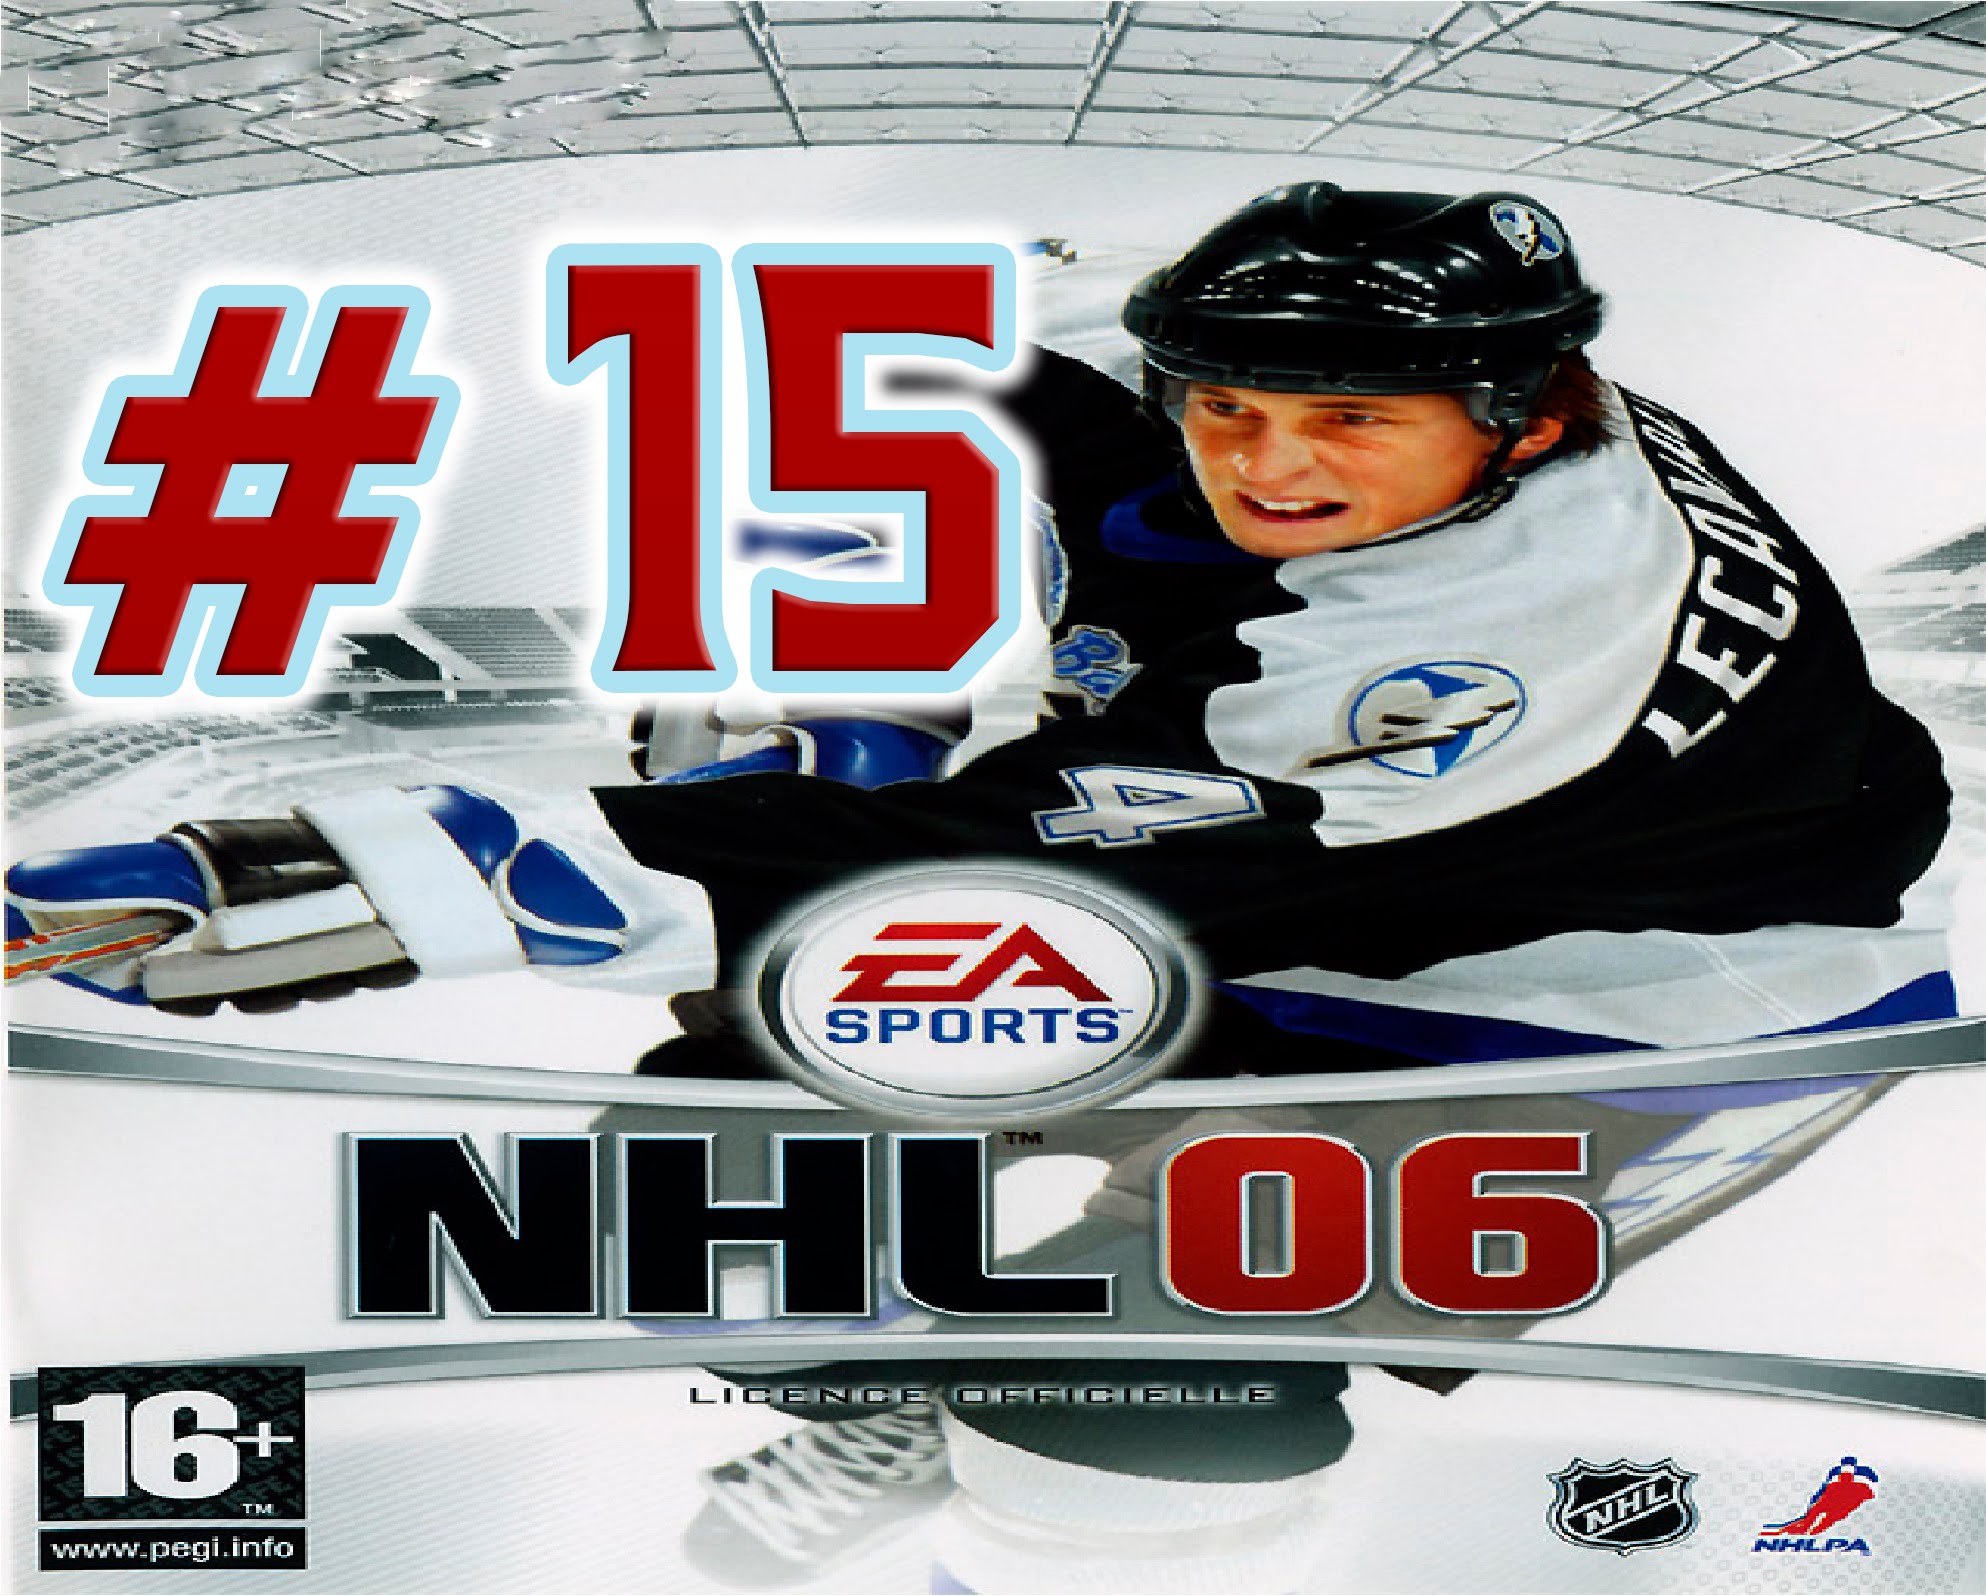 NHL 06 HD wallpapers, Desktop wallpaper - most viewed